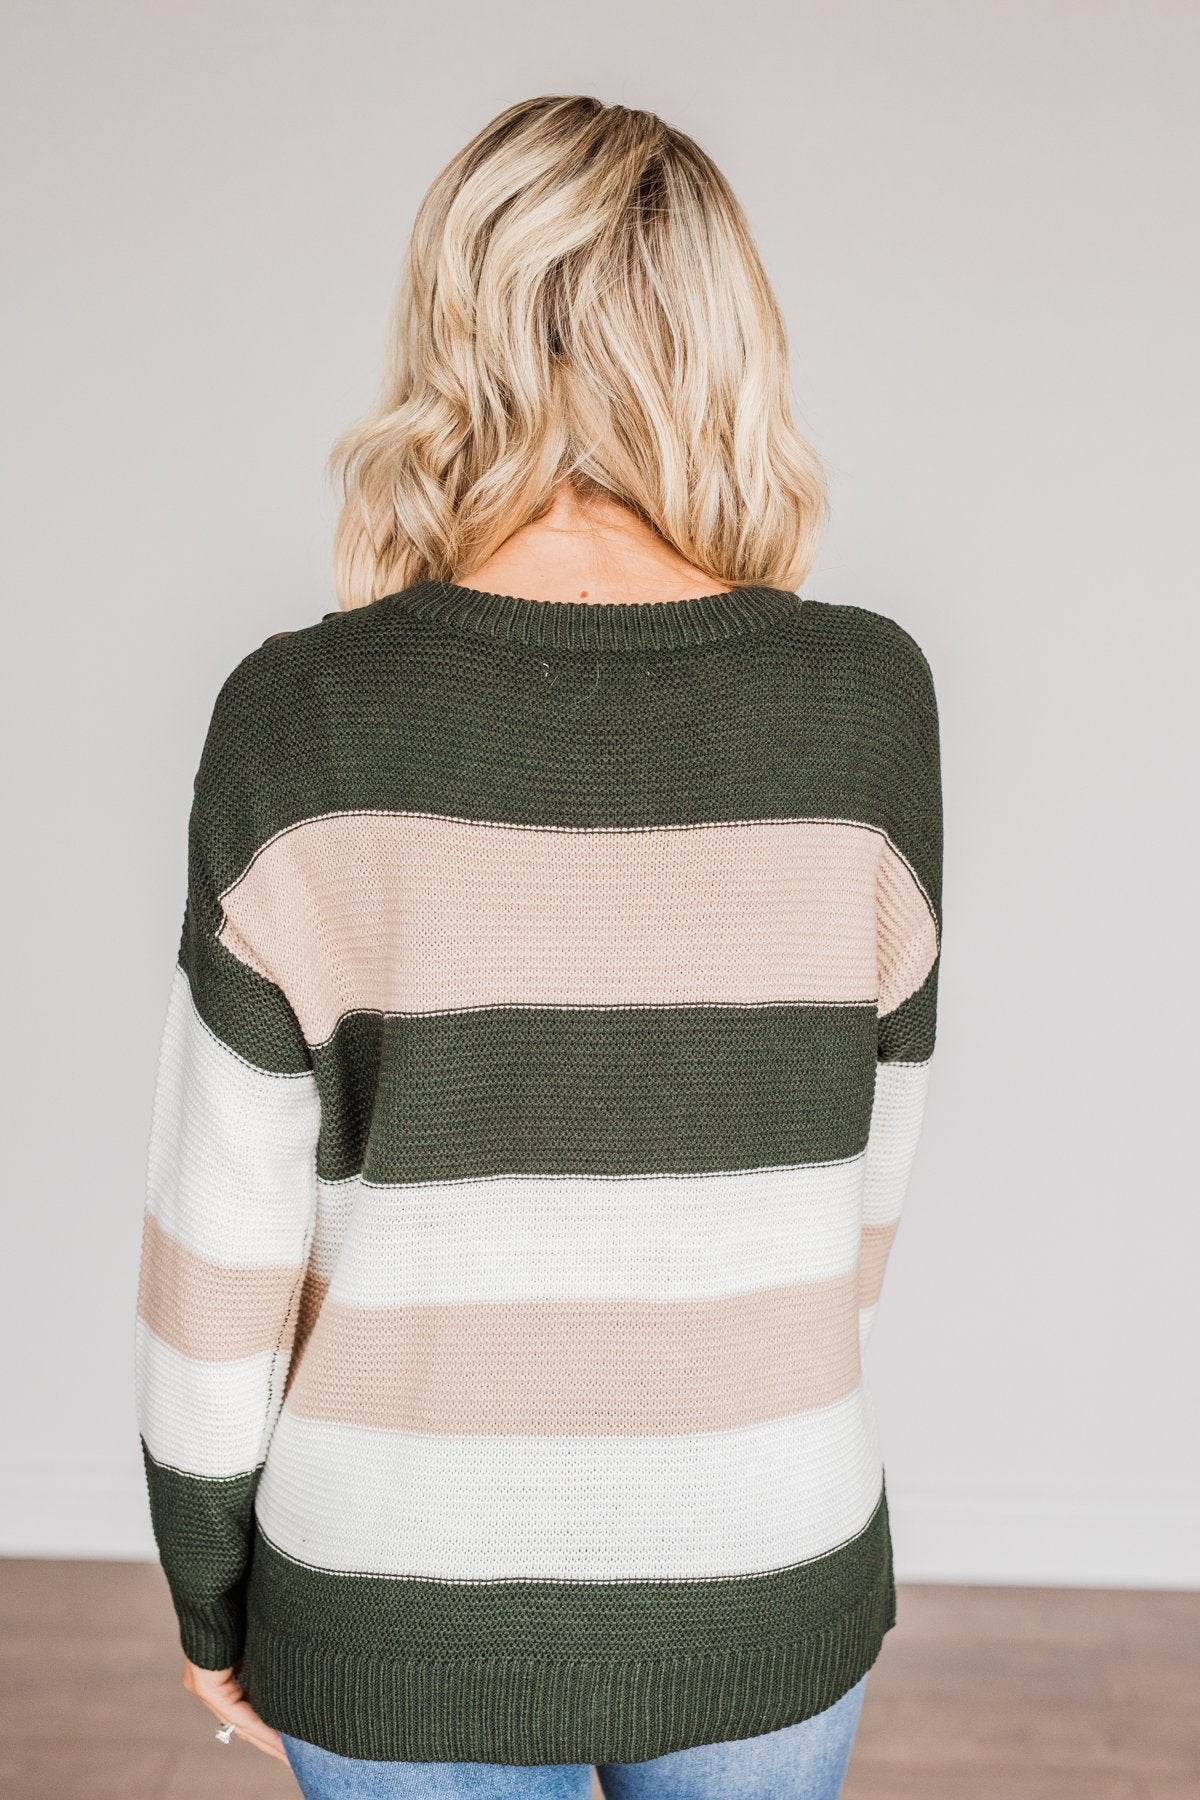 Head In The Game Striped Sweater- Hunter Green & Oatmeal